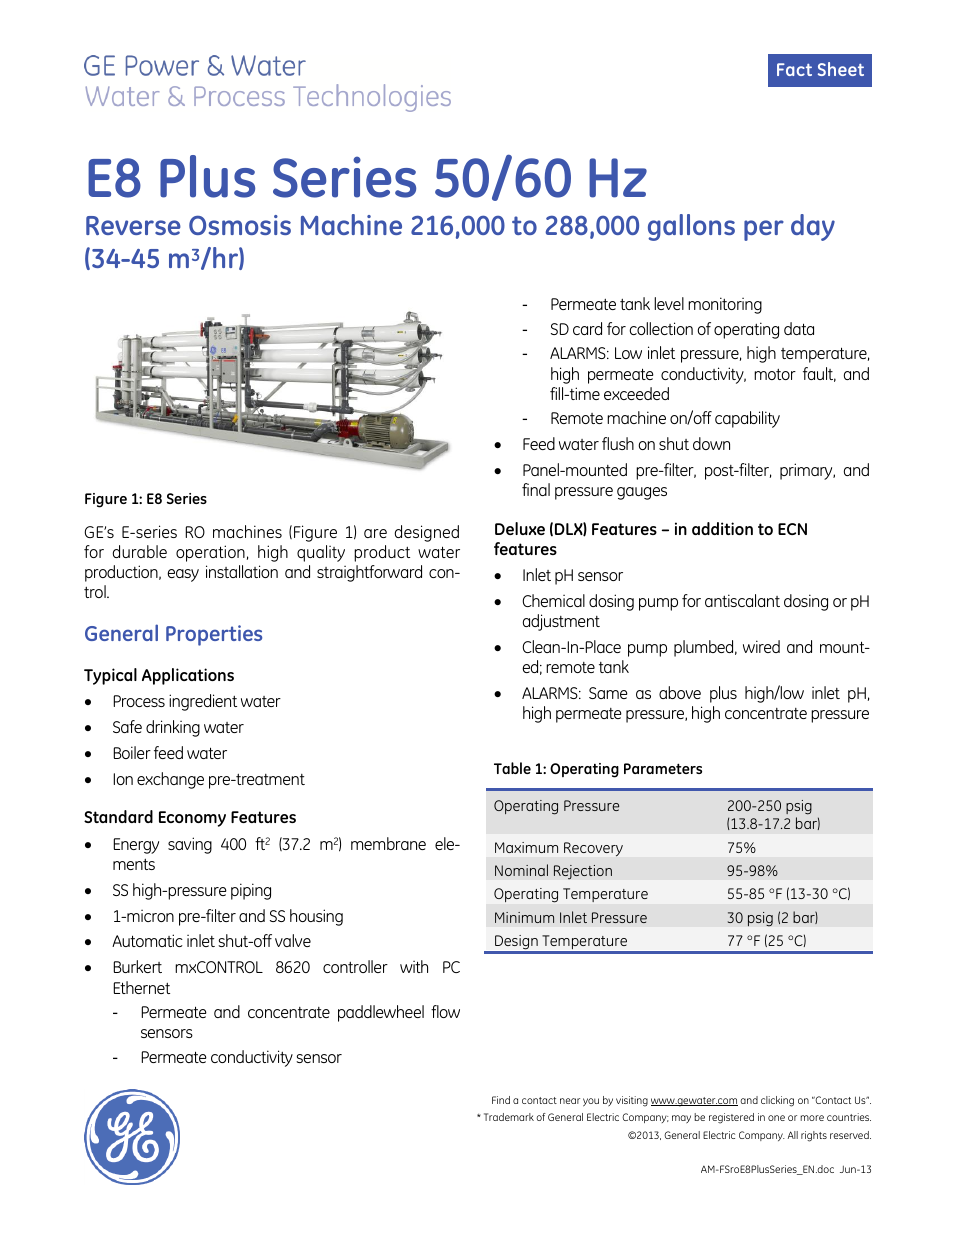 E-Series Reverse Osmosis - E8 Plus Series 50_60 Hz